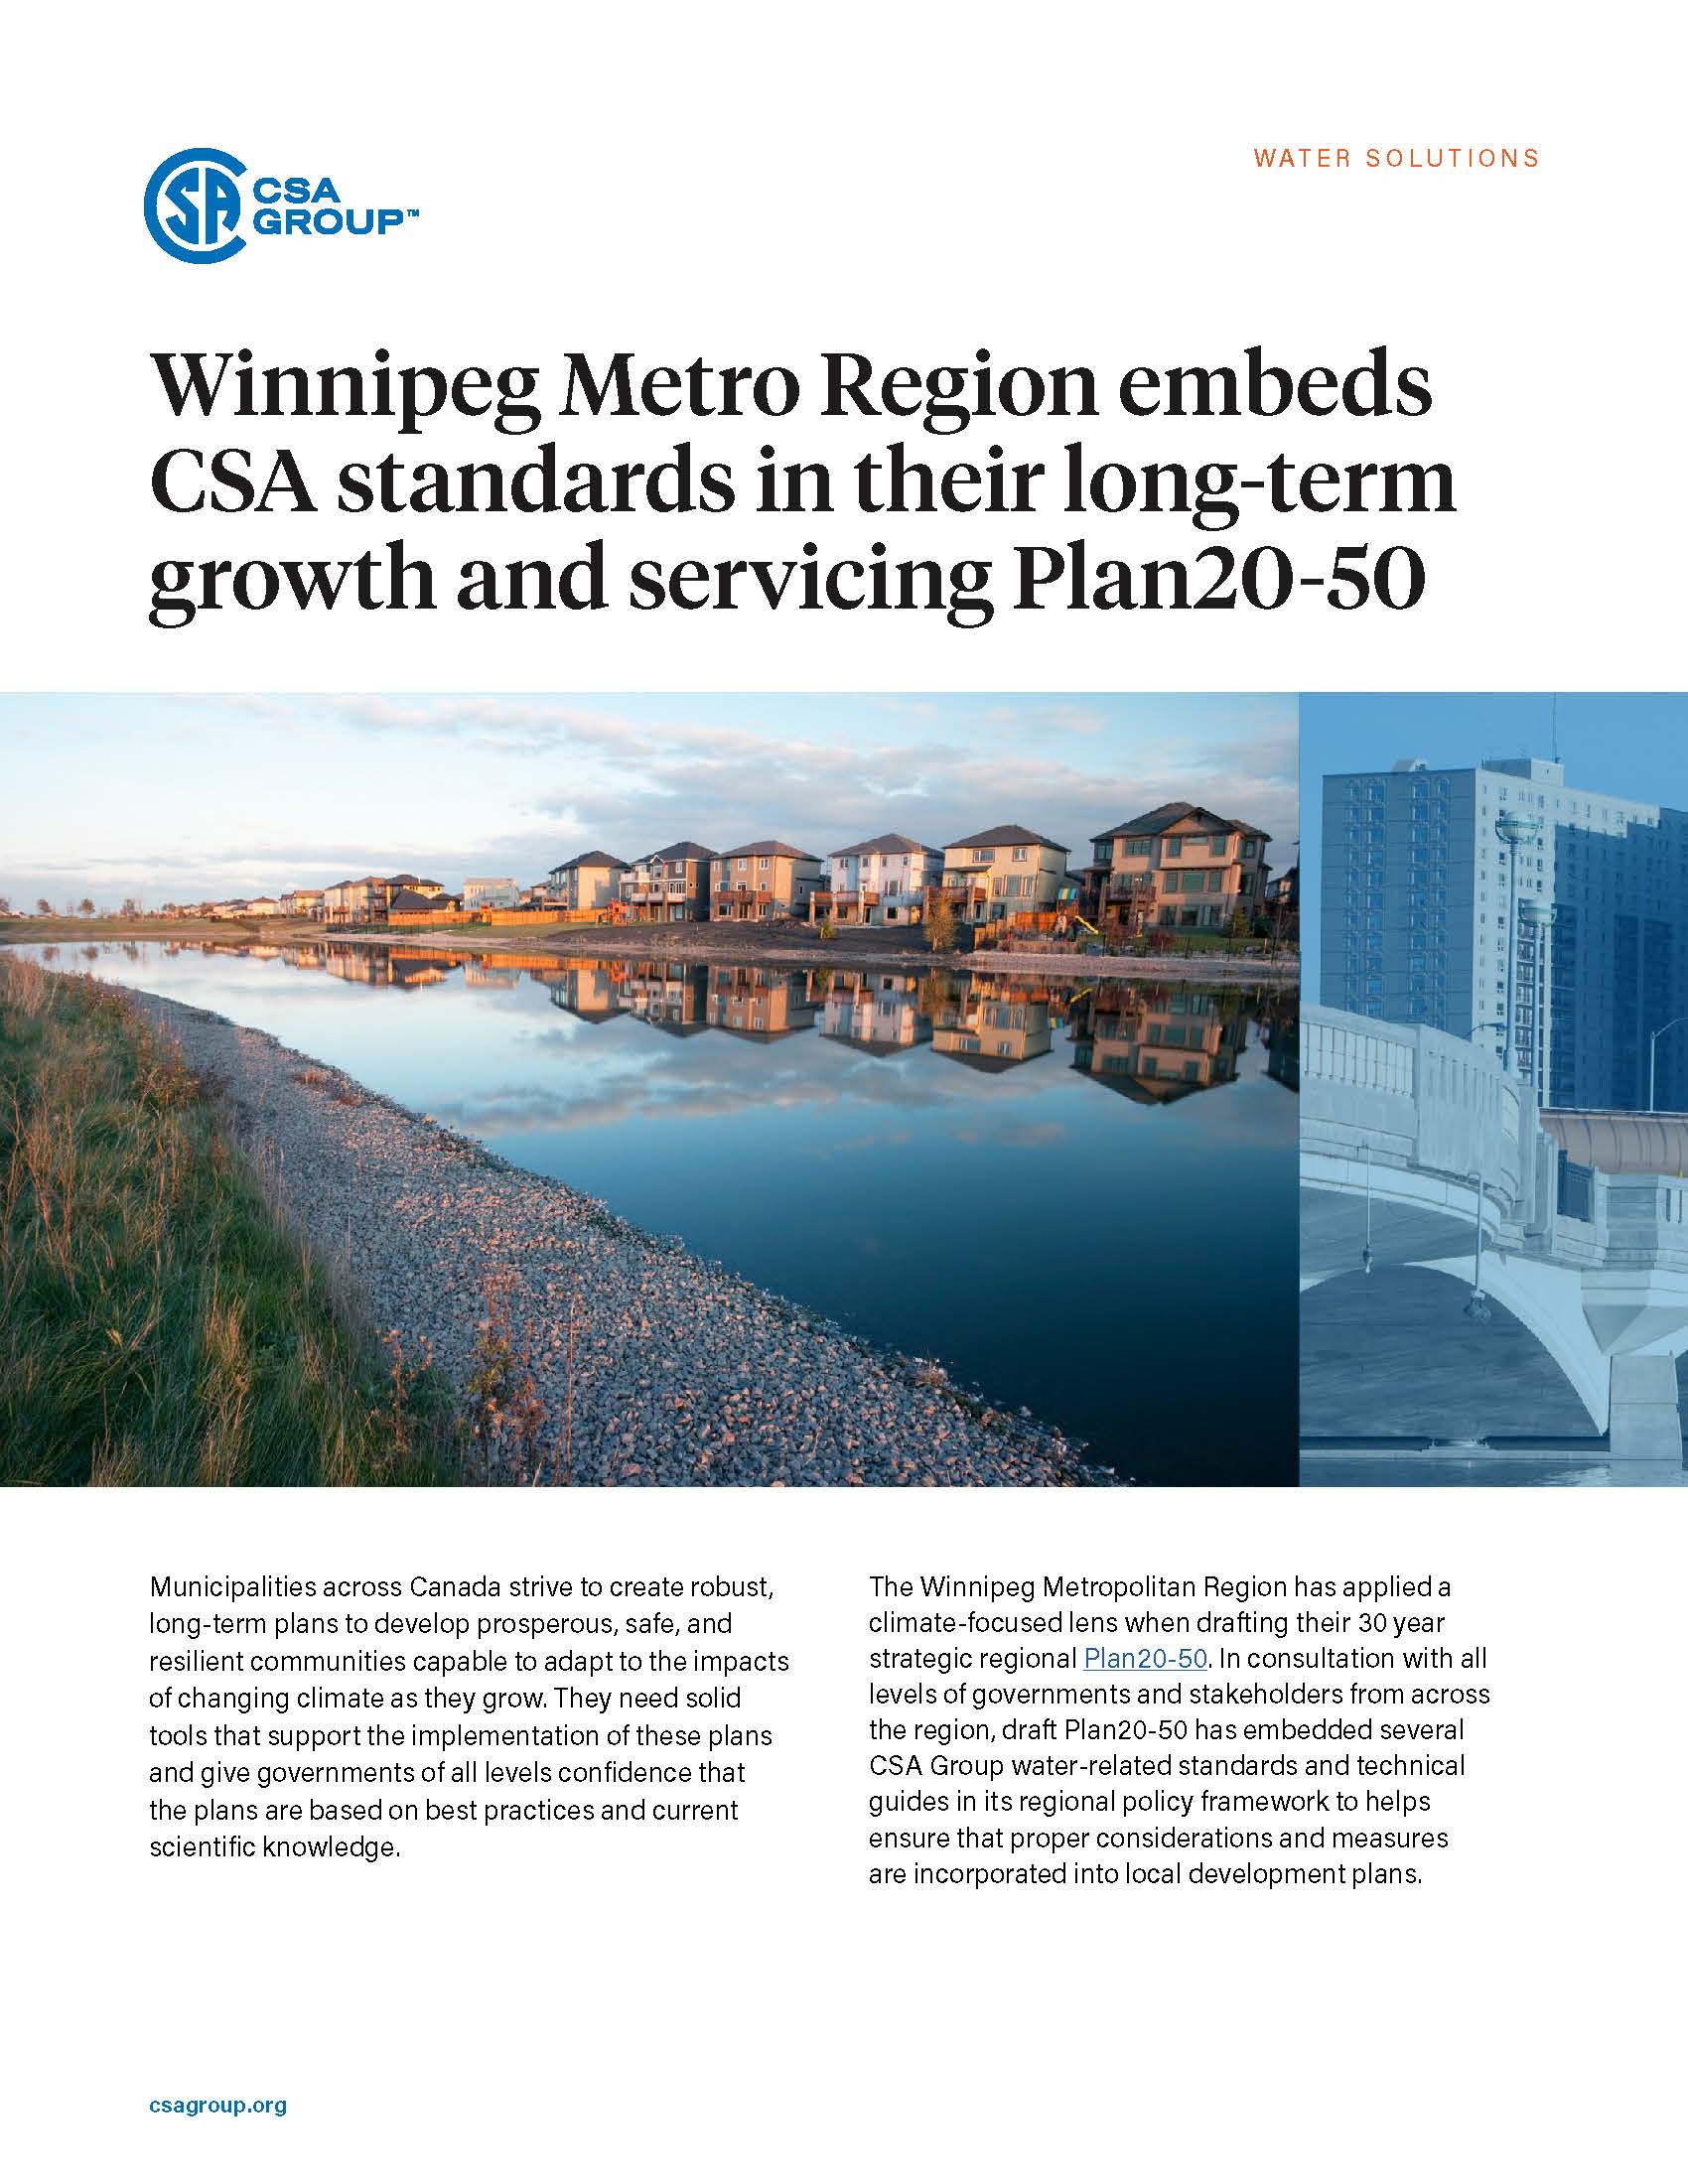 Featured Image. Winnipeg Metro Region embeds CSA Group standards in Plan 20-50